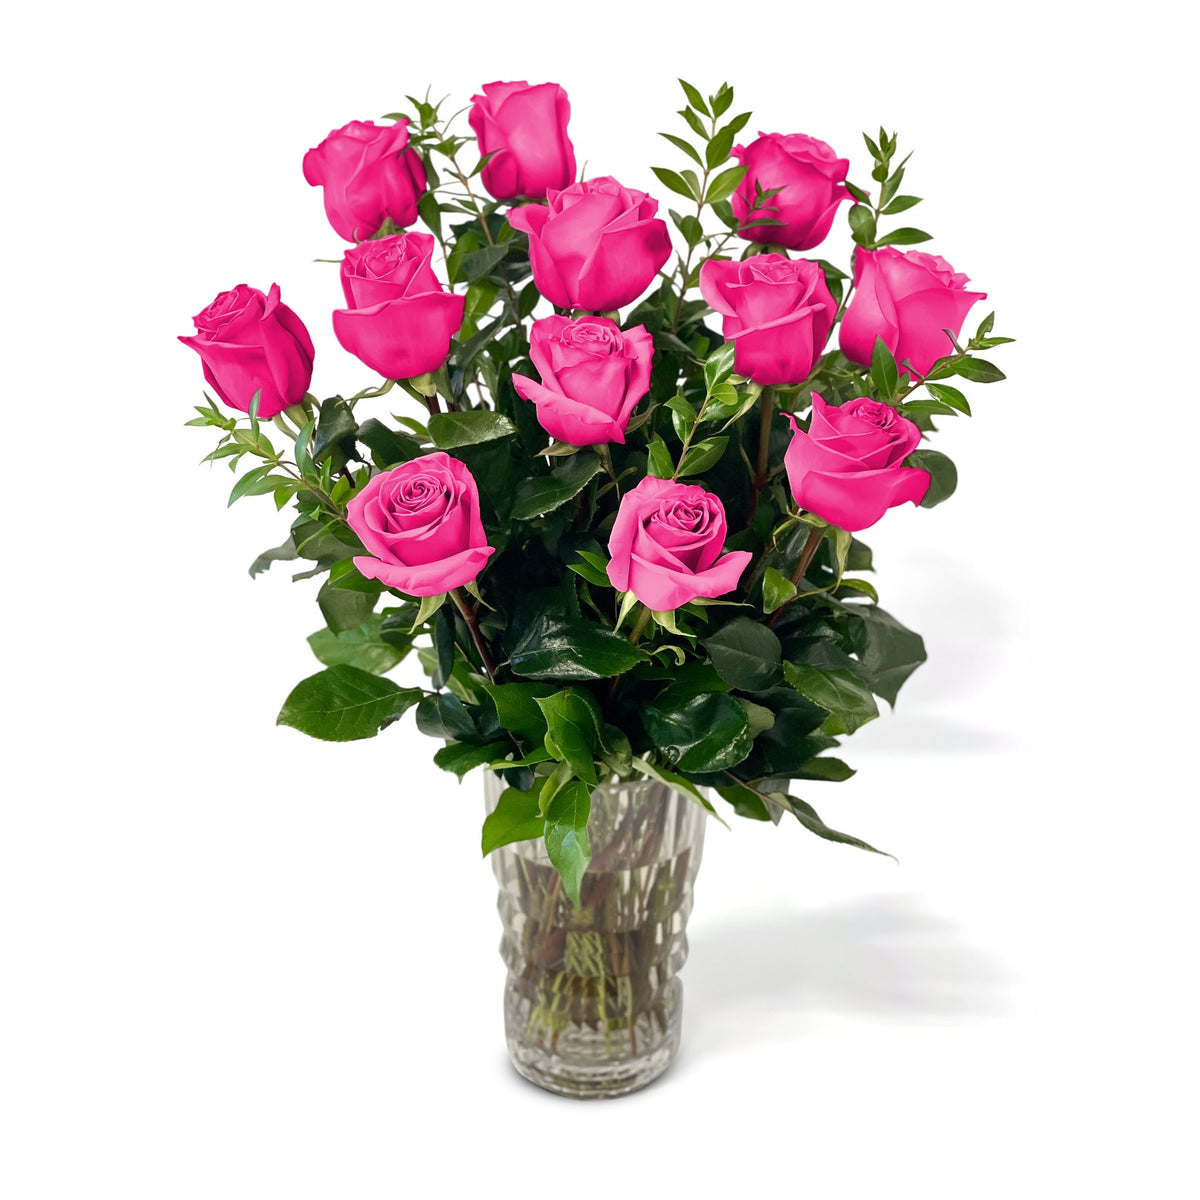 Queens Flower Delivery - Fresh Roses in a Crystal Vase | Hot Pink - 1 Dozen